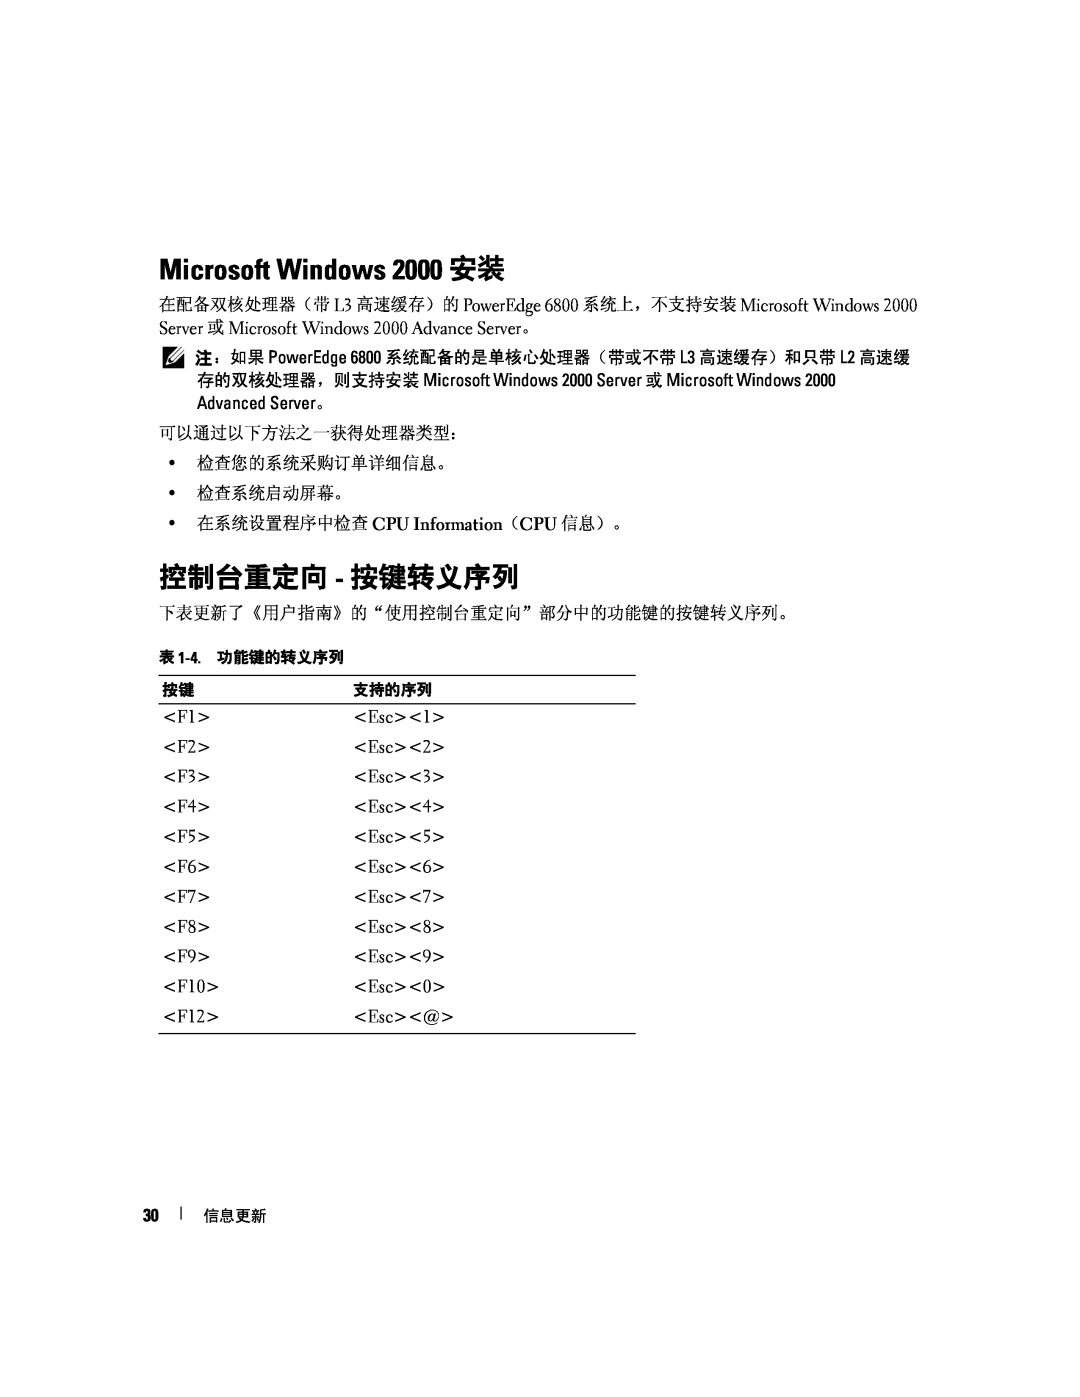 Dell 6800 manual Microsoft Windows 2000 安装, 控制台重定向 - 按键转义序列 